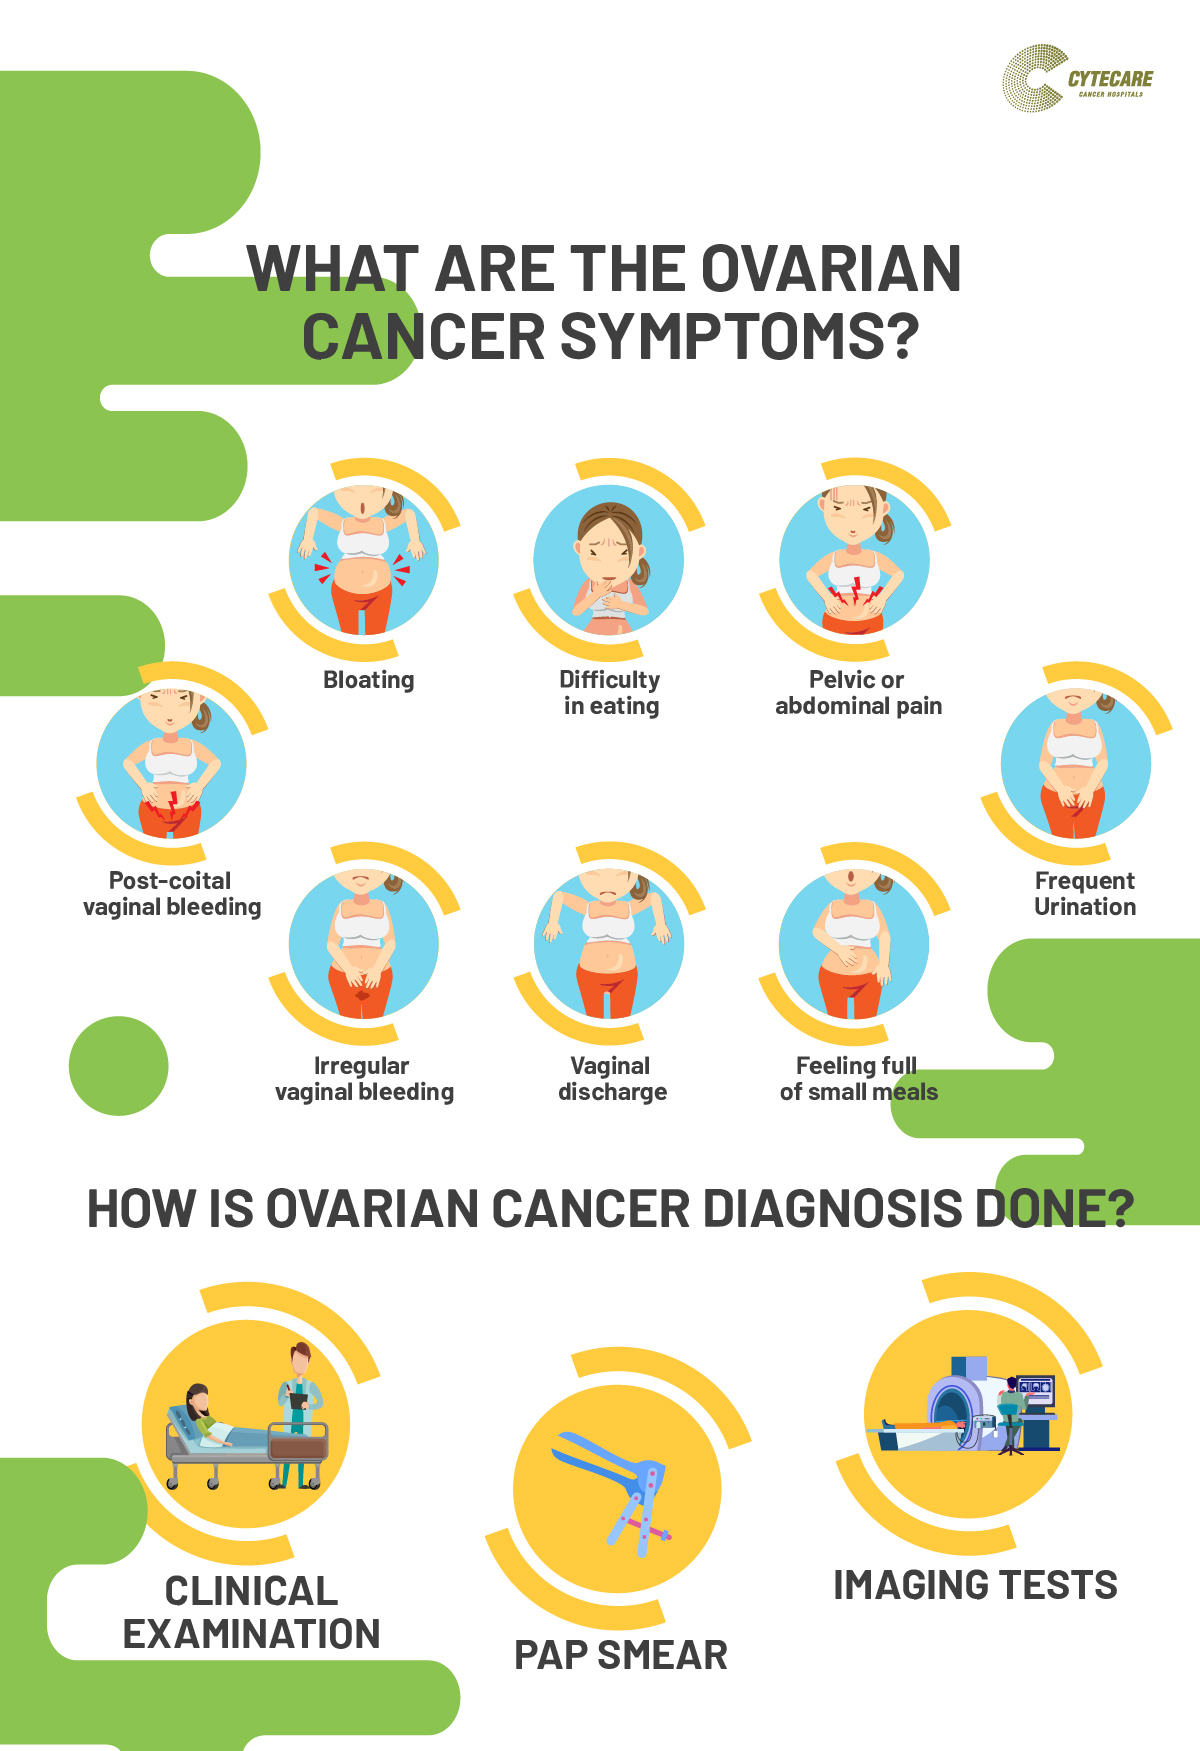 ovarian cancer or cyst symptoms